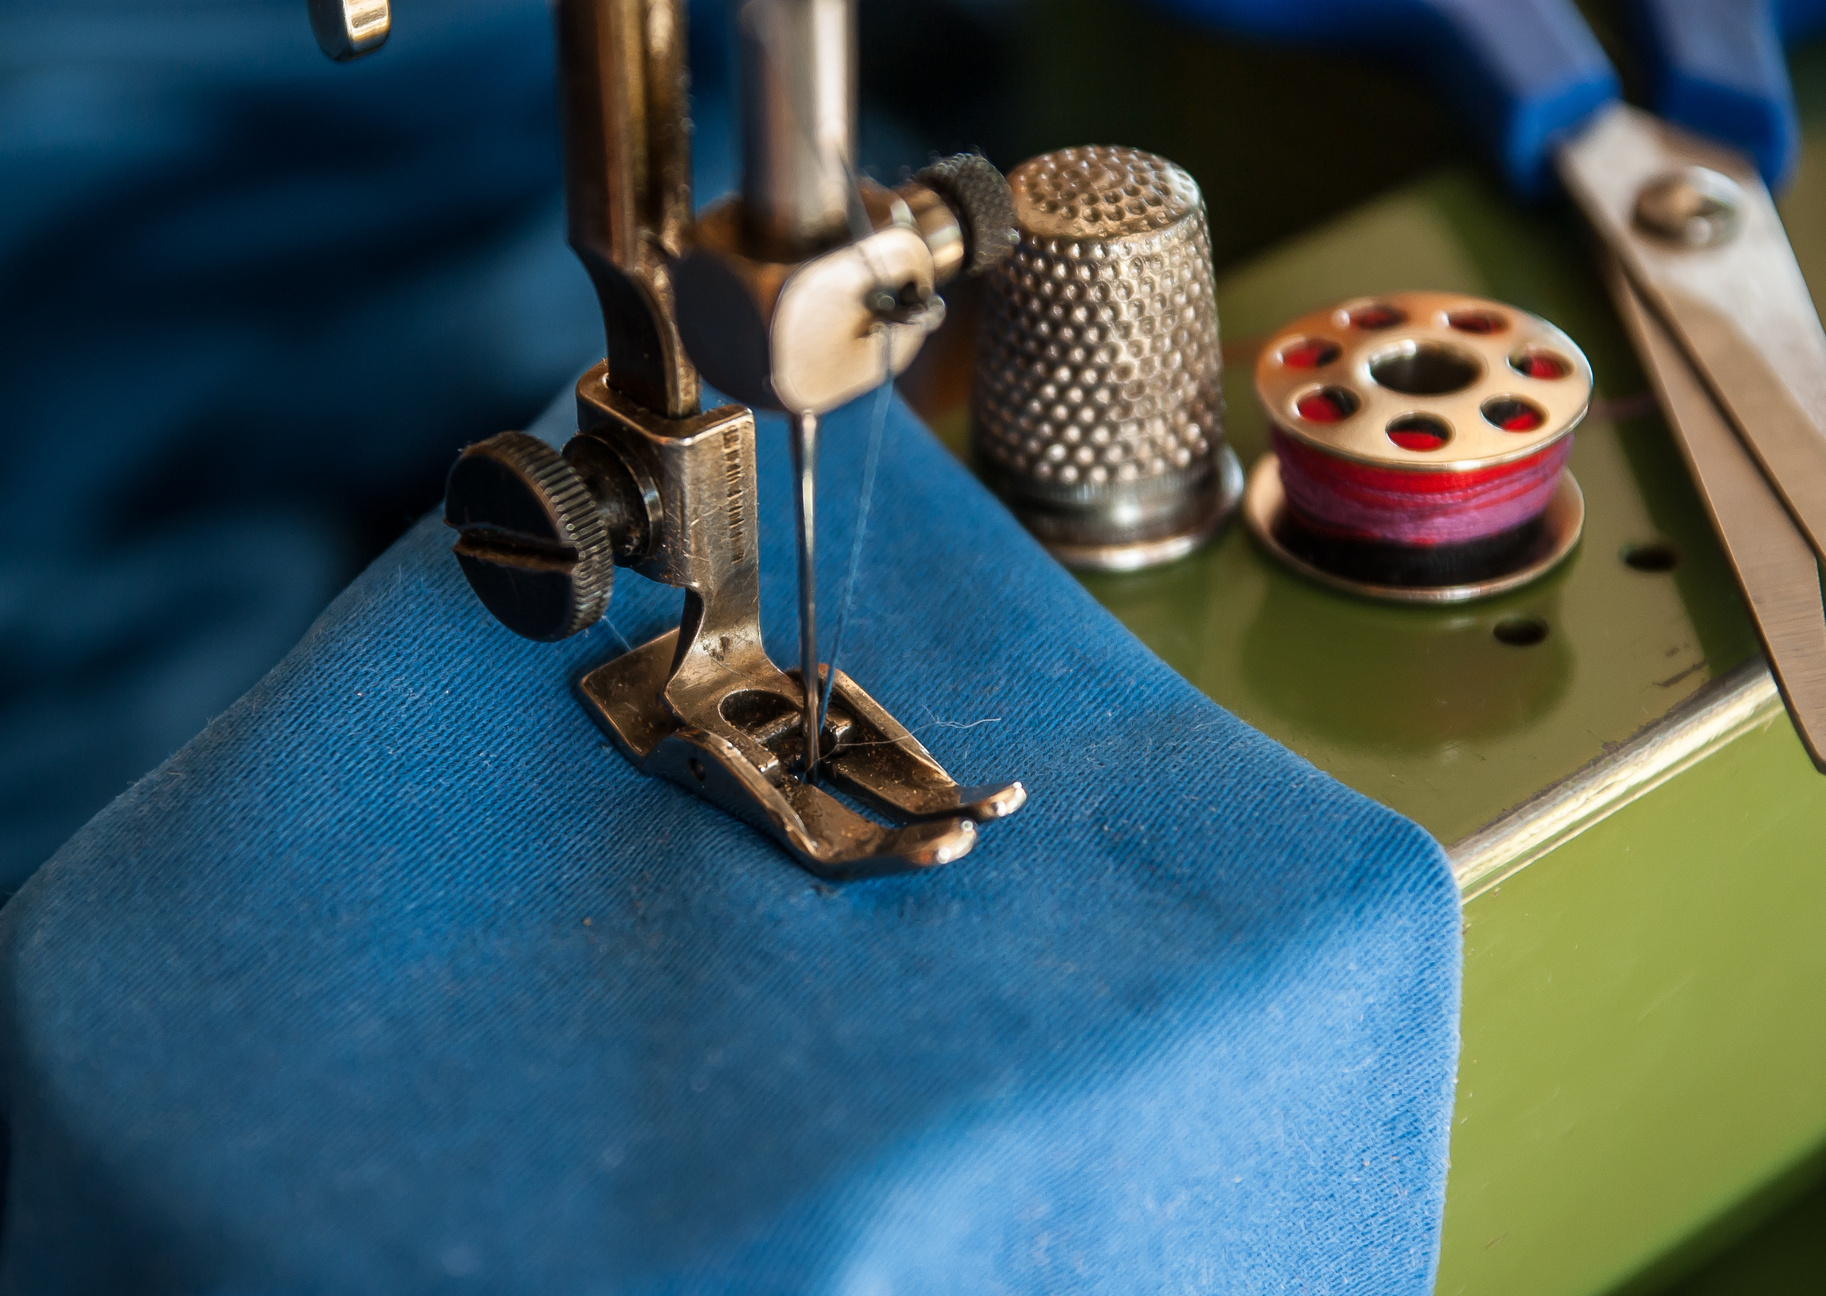 Sewing in a Sewing Machine